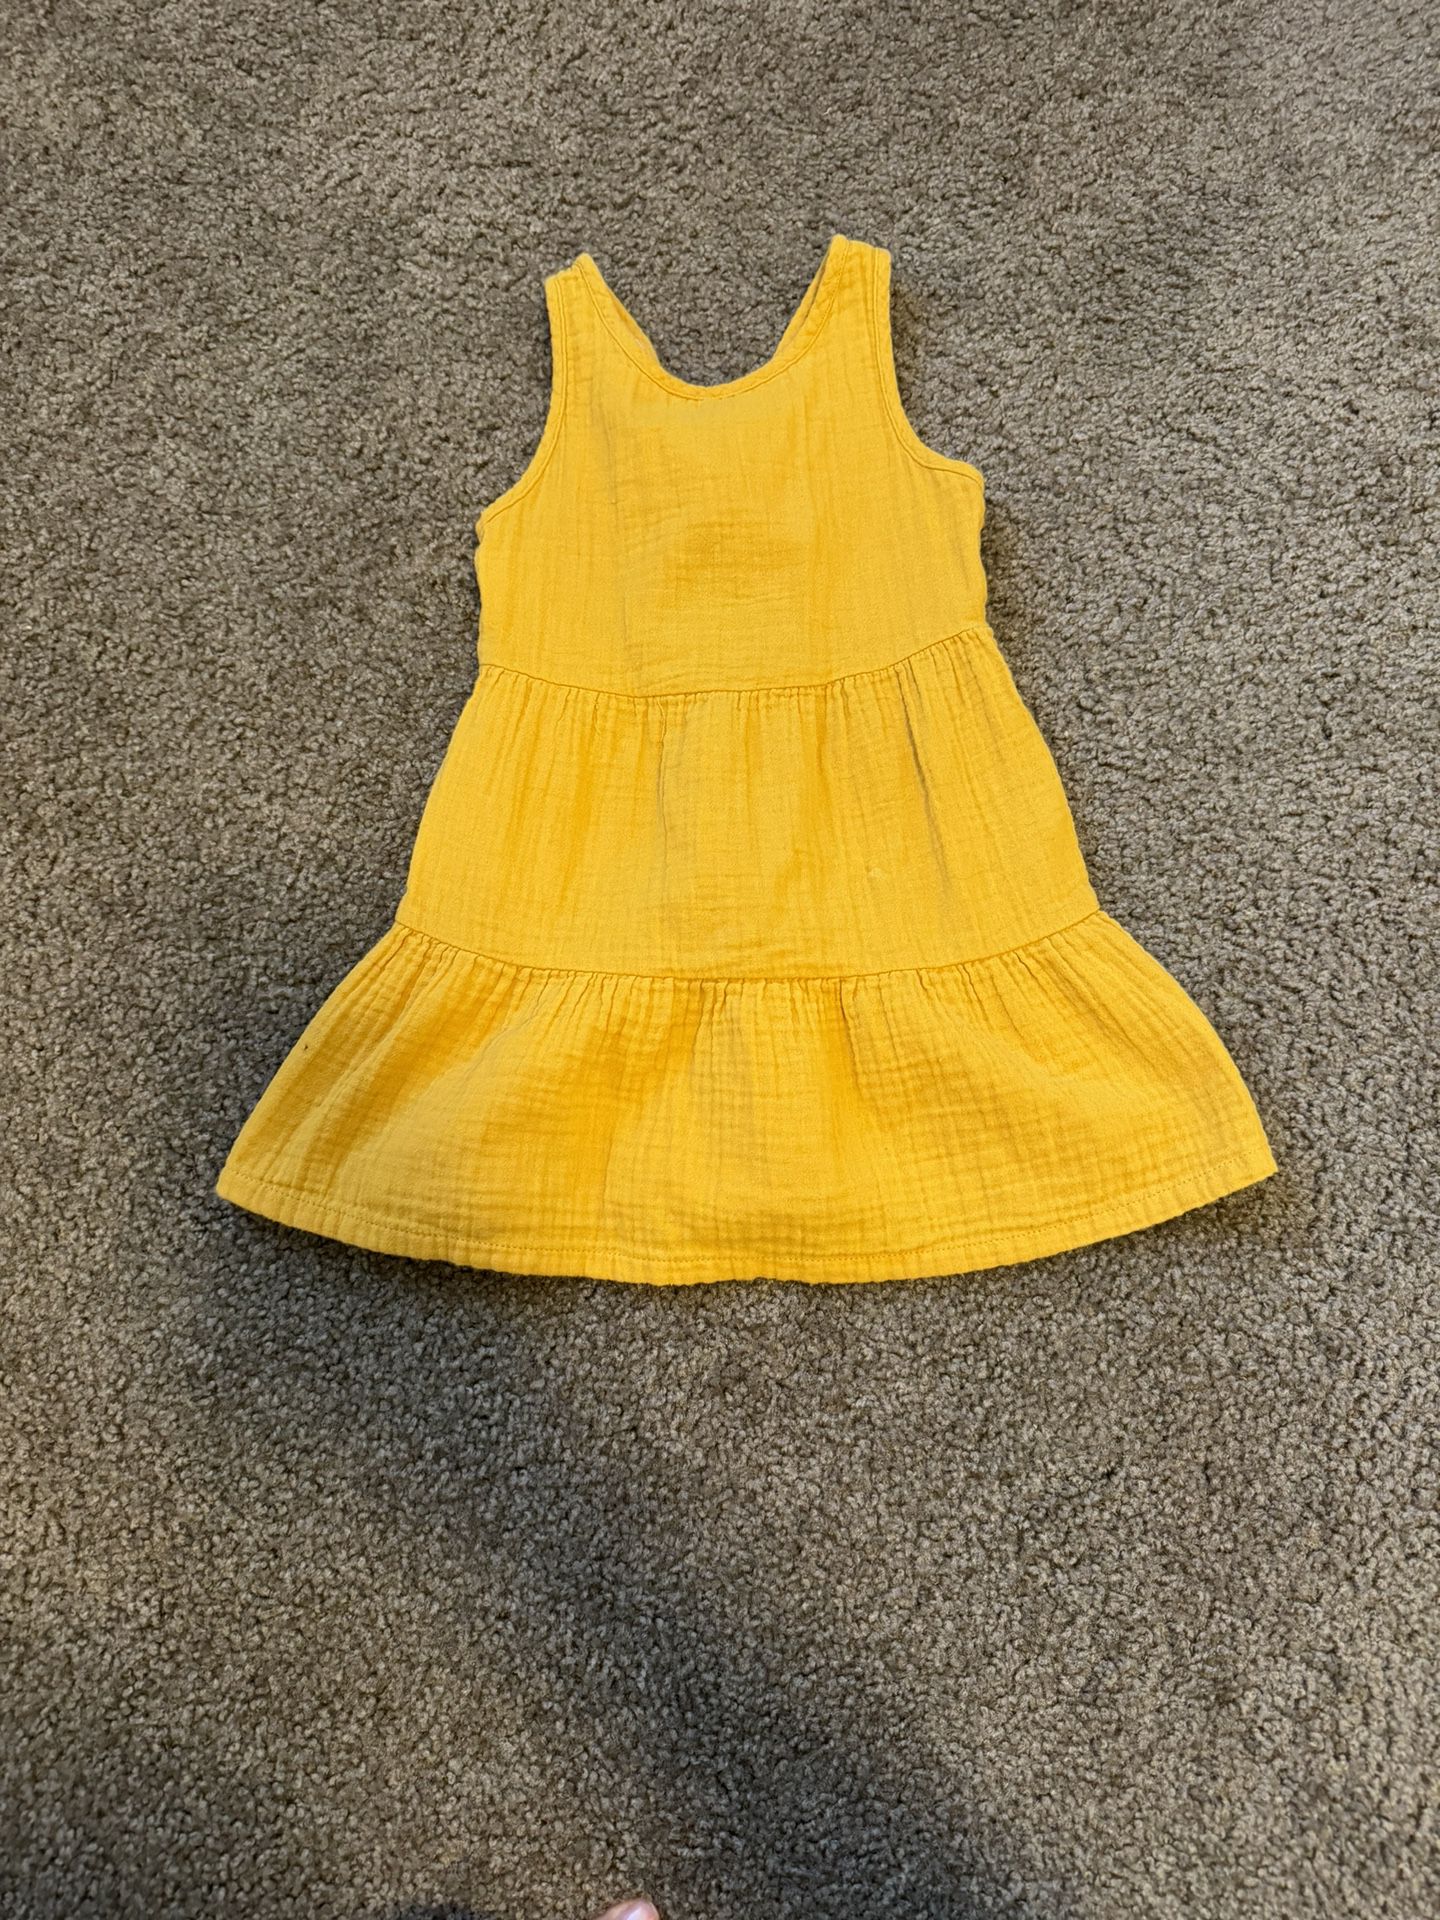 Yellow Dress 2t